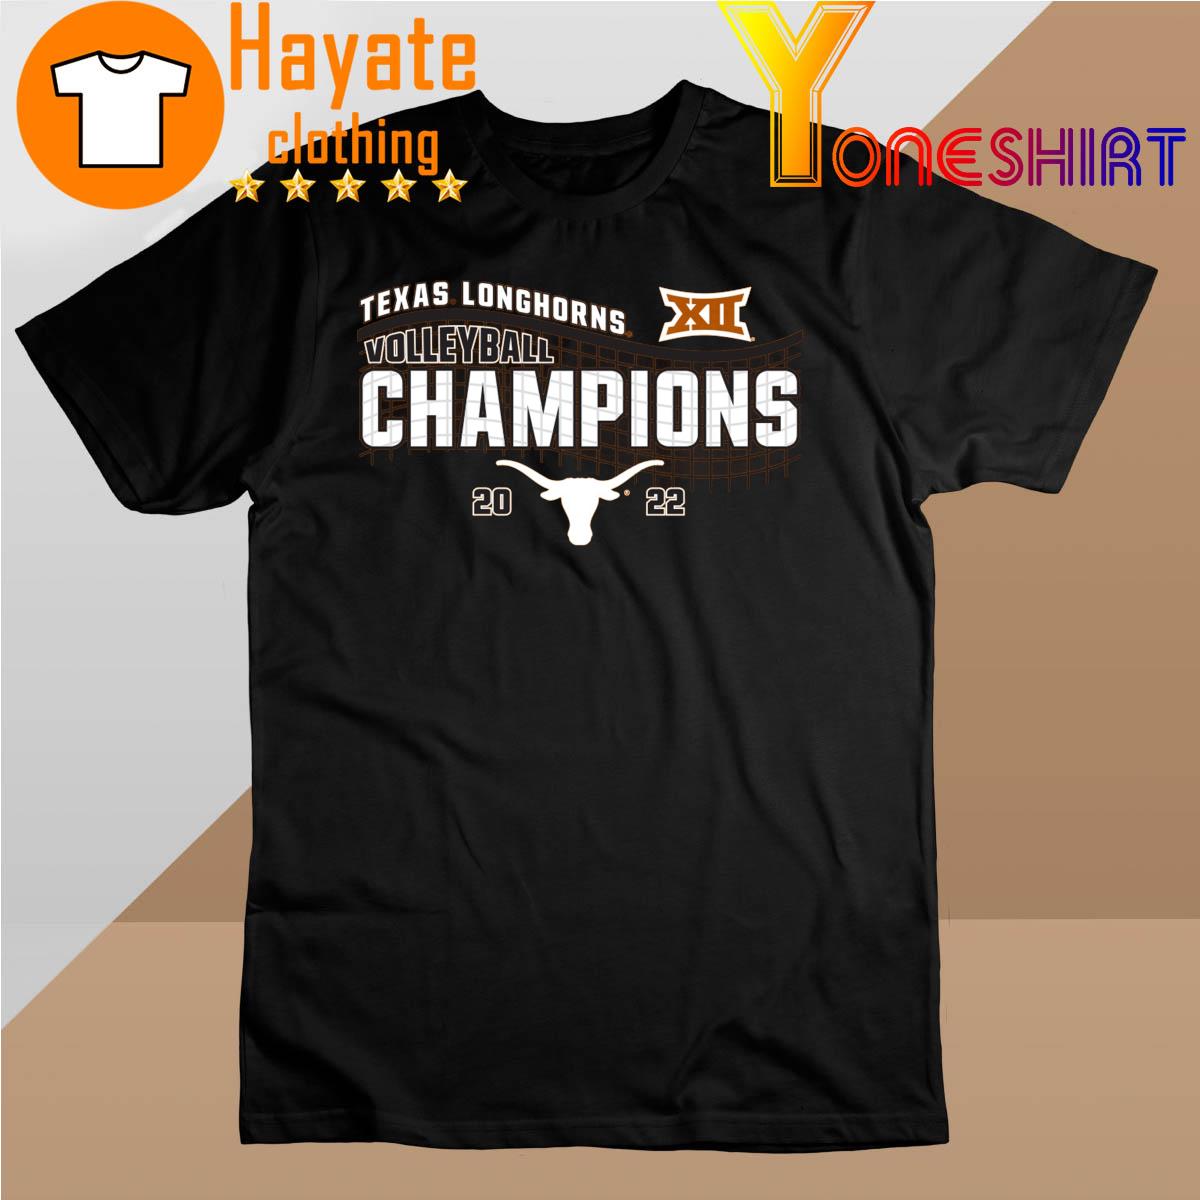 Texas Longhorns Volleyball Champions 2022 shirt